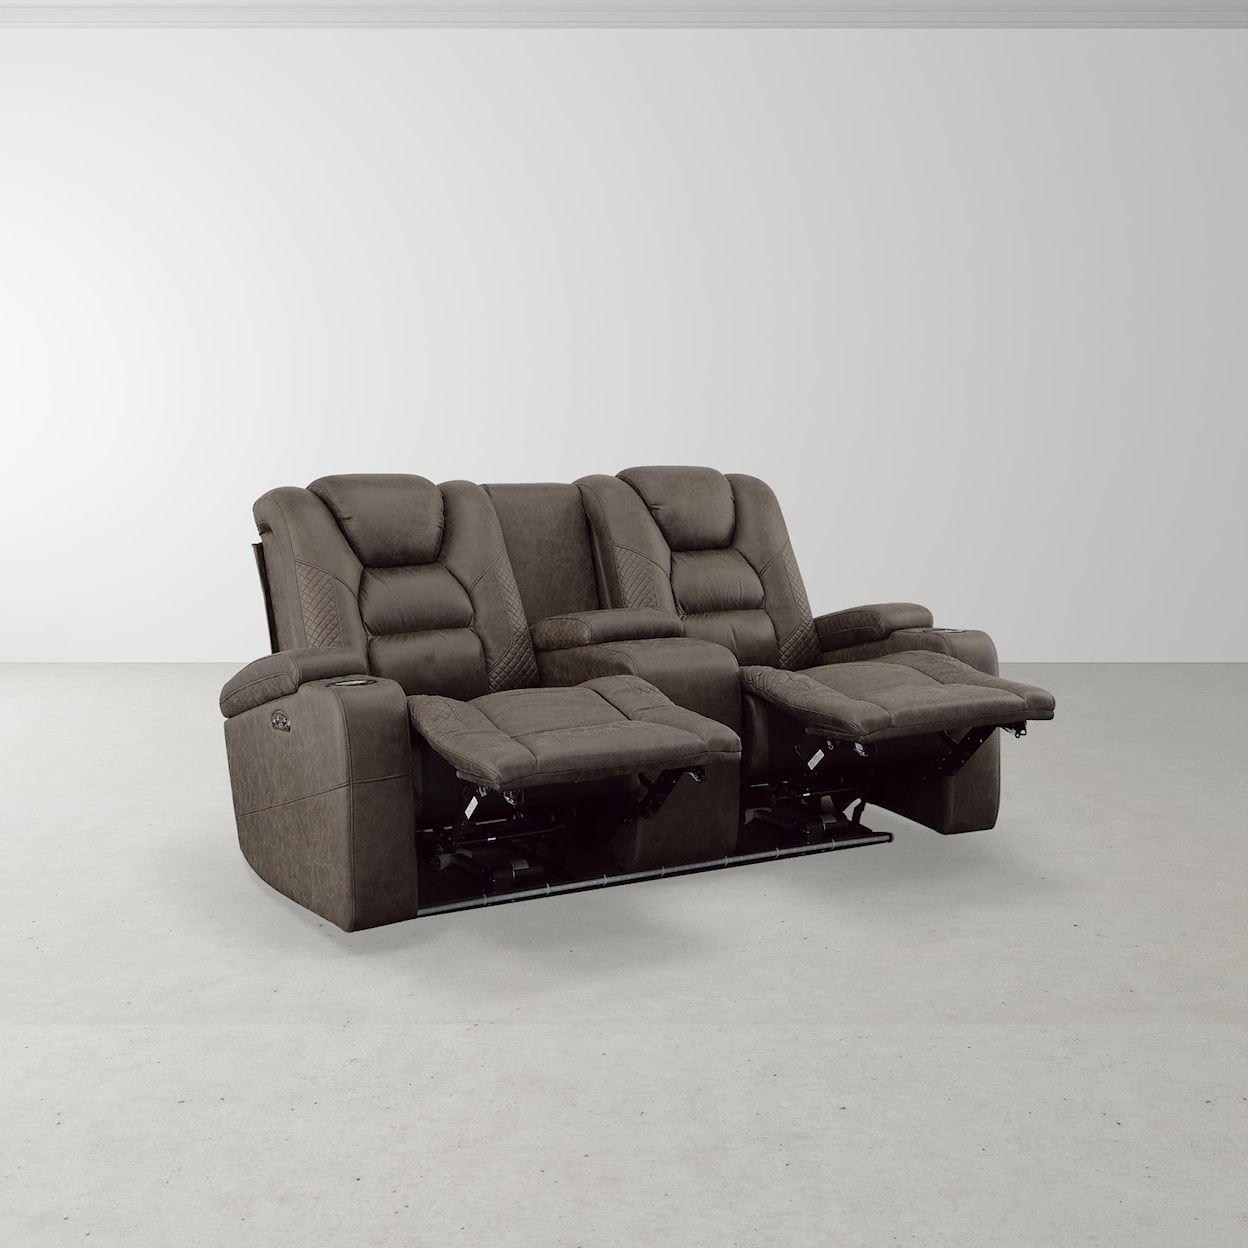 Sarah Randolph Designs Randolph Power Reclining Sofa and Loveseat